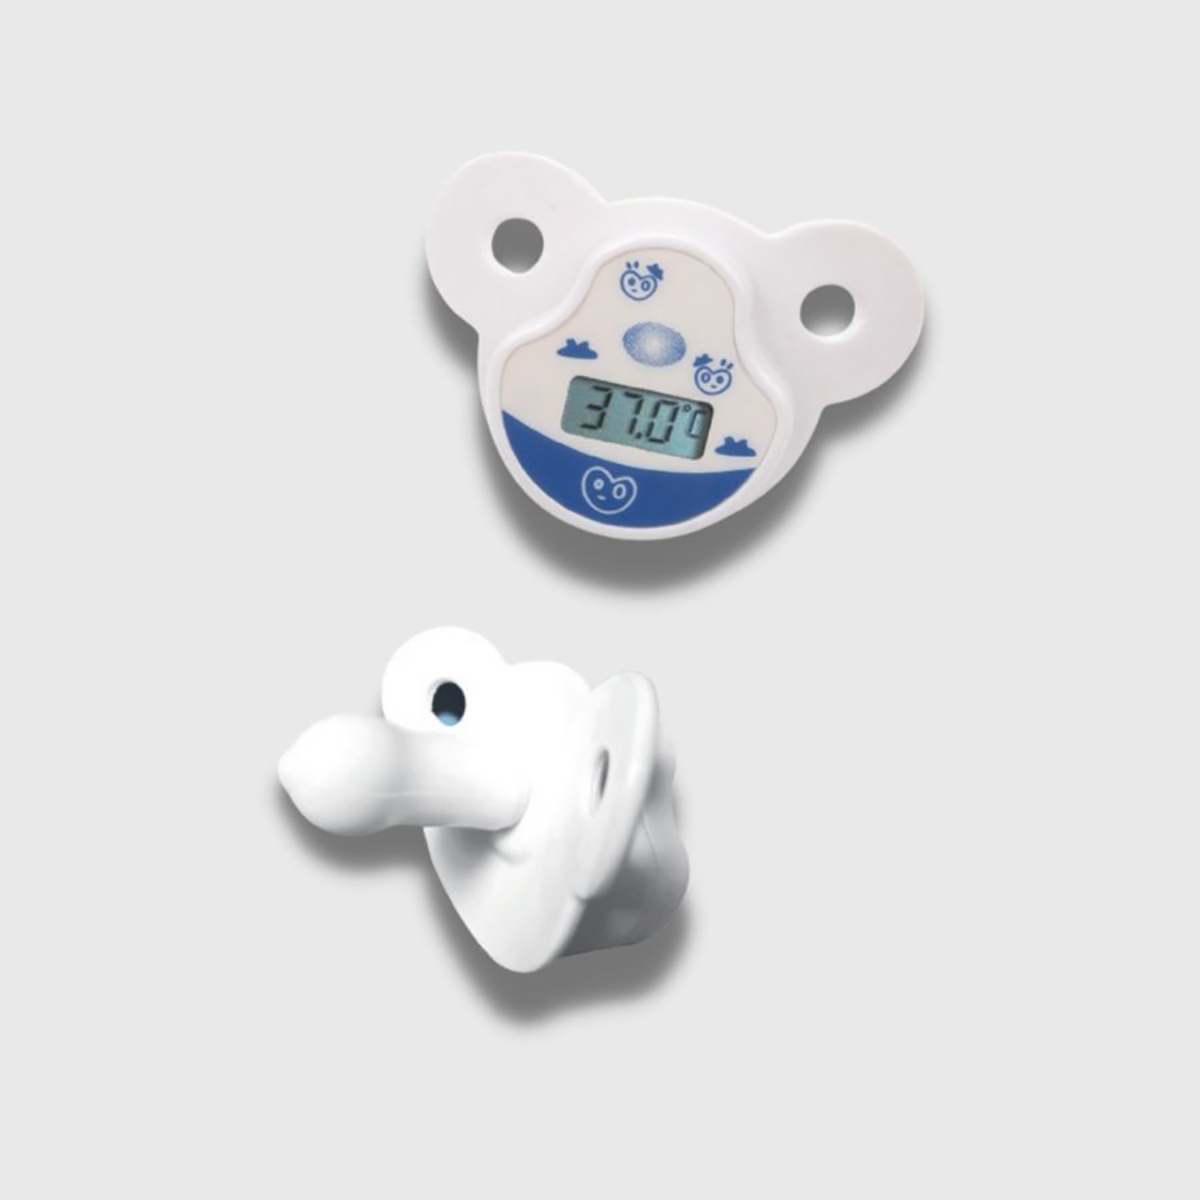 Digital Pacifier Baby Thermometer fir Neigebueren Check fir e Féiwer Nippel Style Baby Thermometer